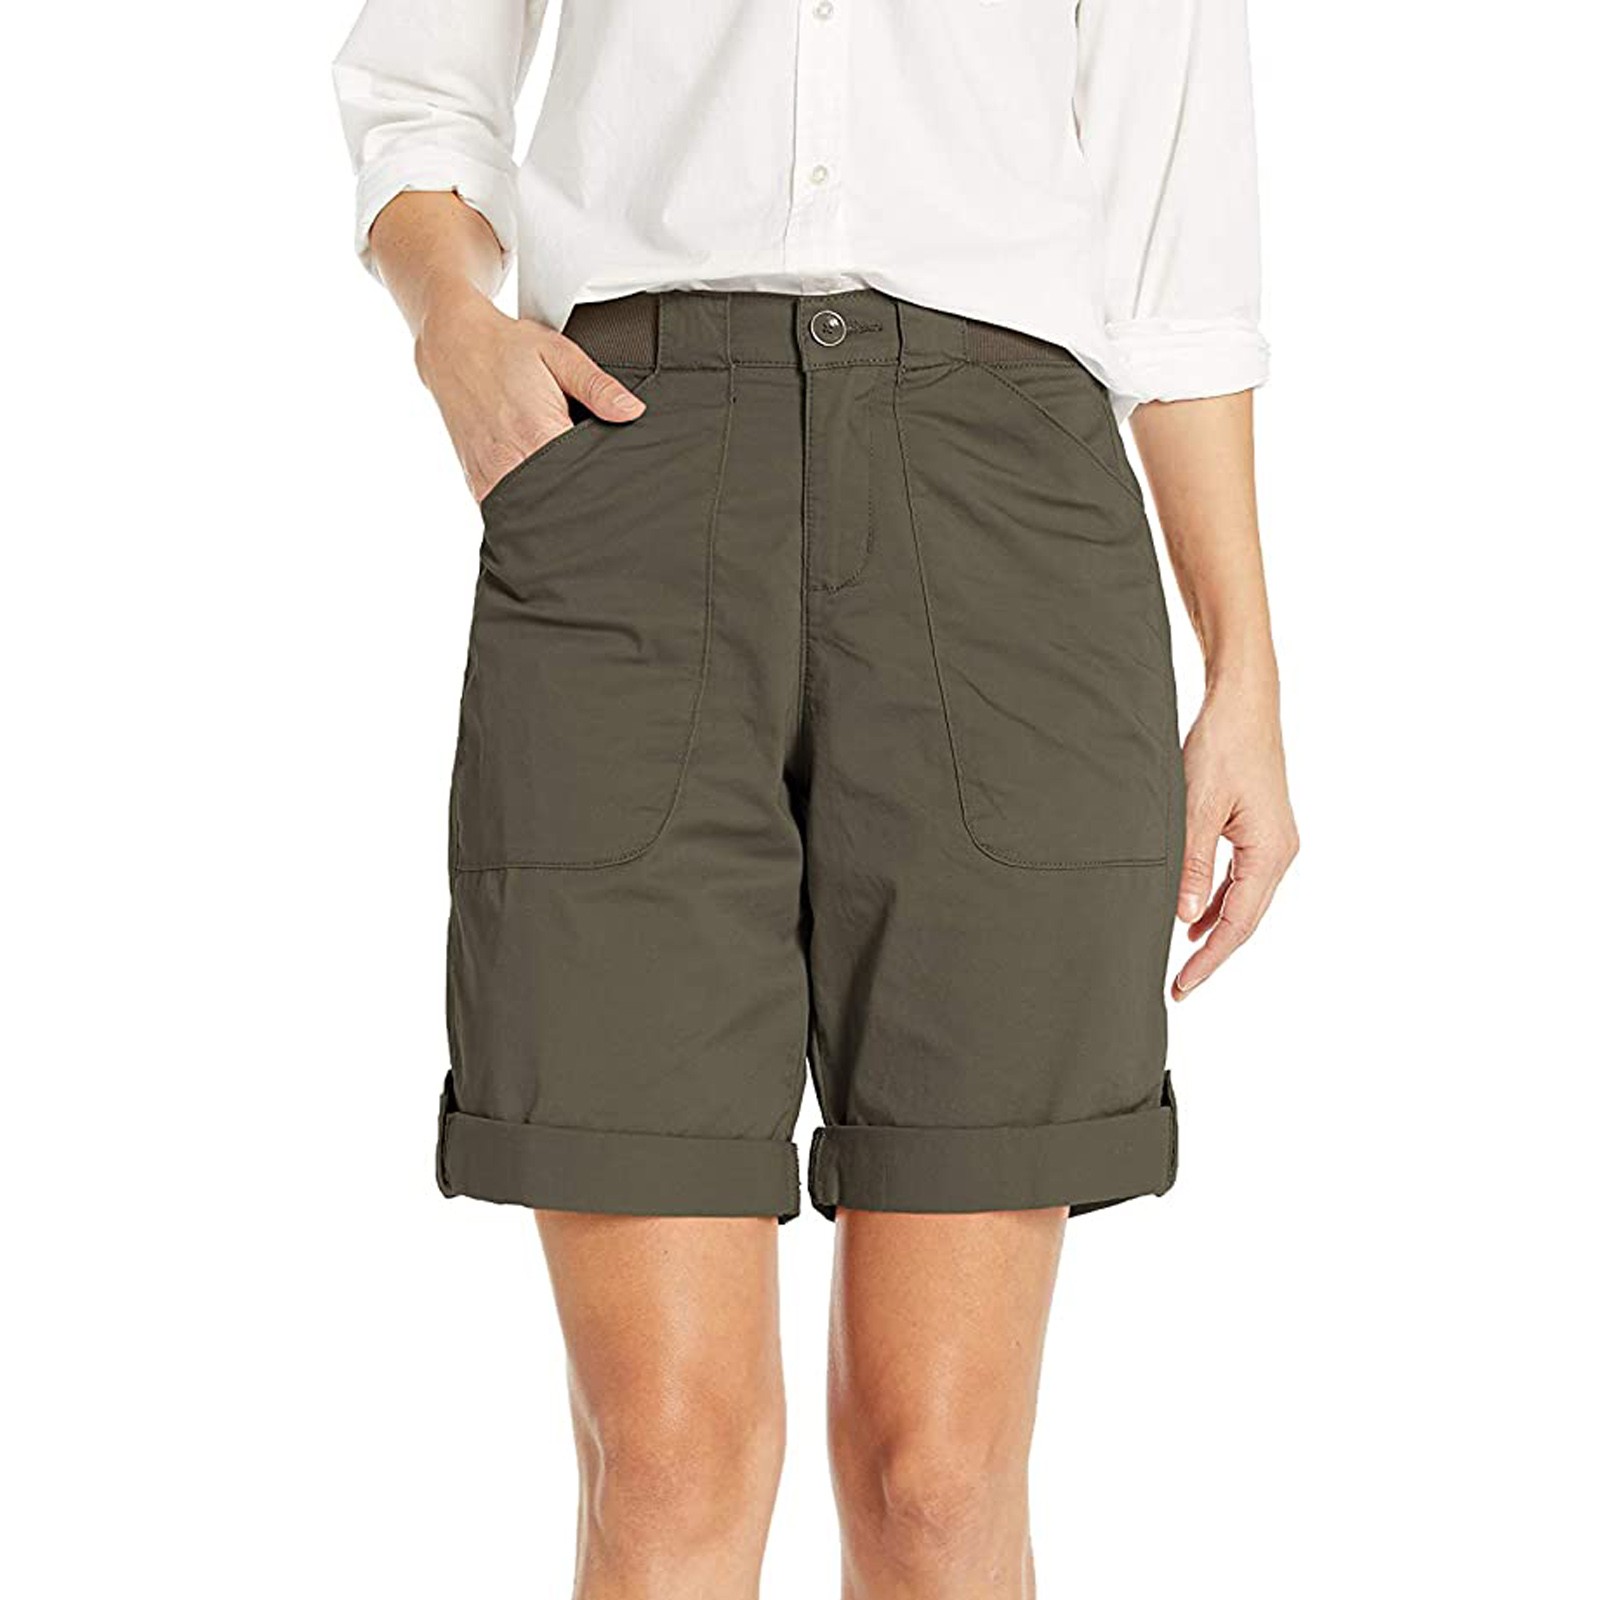 Women Cotton Linen Shorts with Pockets Casual Comfy Drawstring Elastic Waist Summer Slim Lady Beach Short Pants 